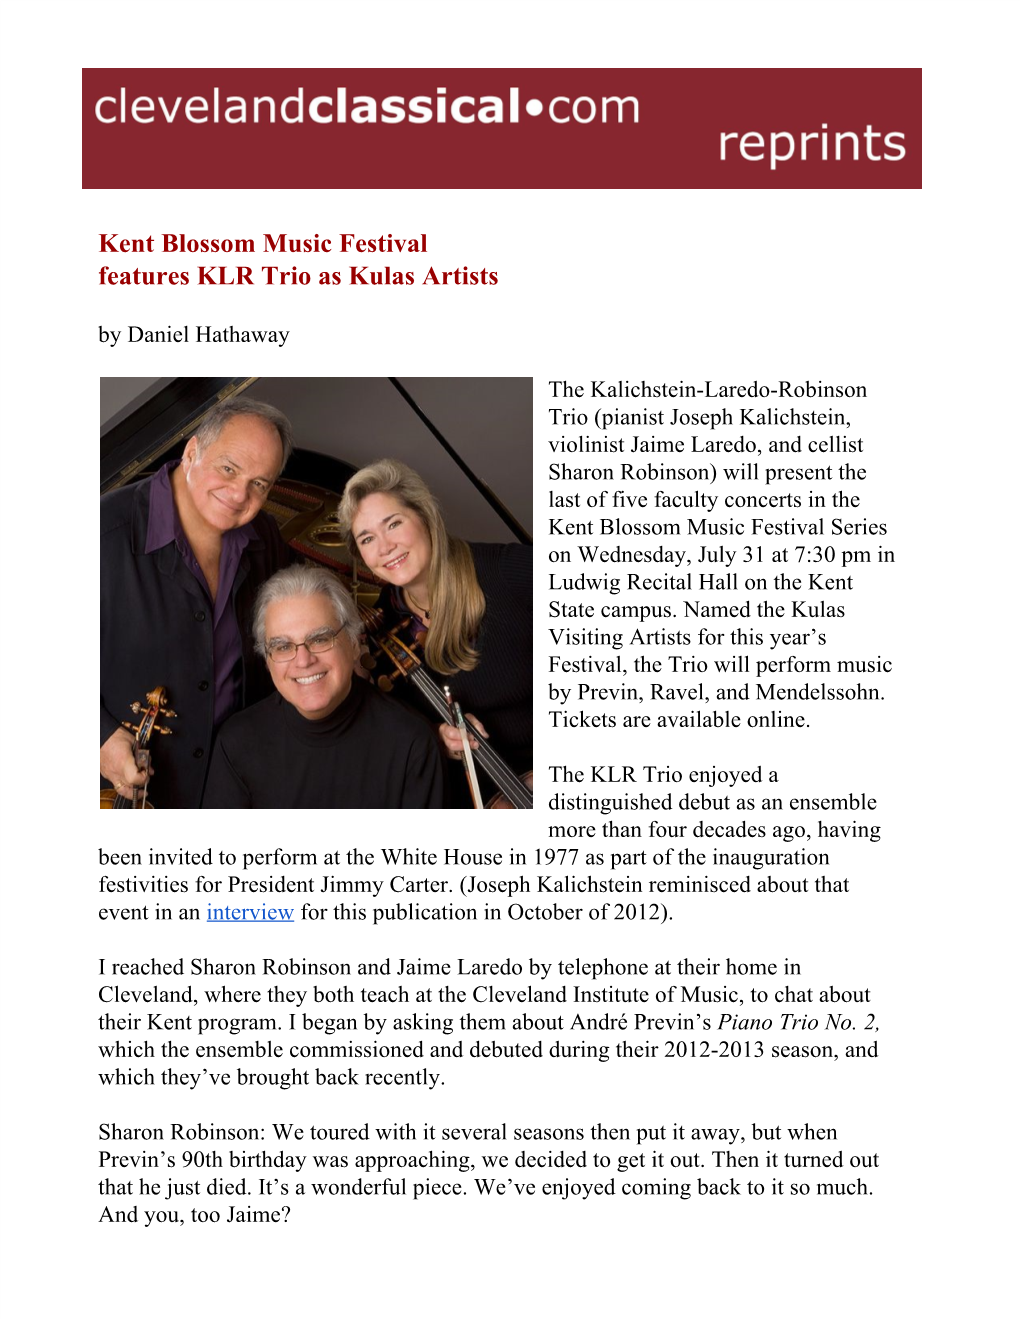 Kent Blossom Music Festival Features KLR Trio As Kulas Artists by Daniel Hathaway